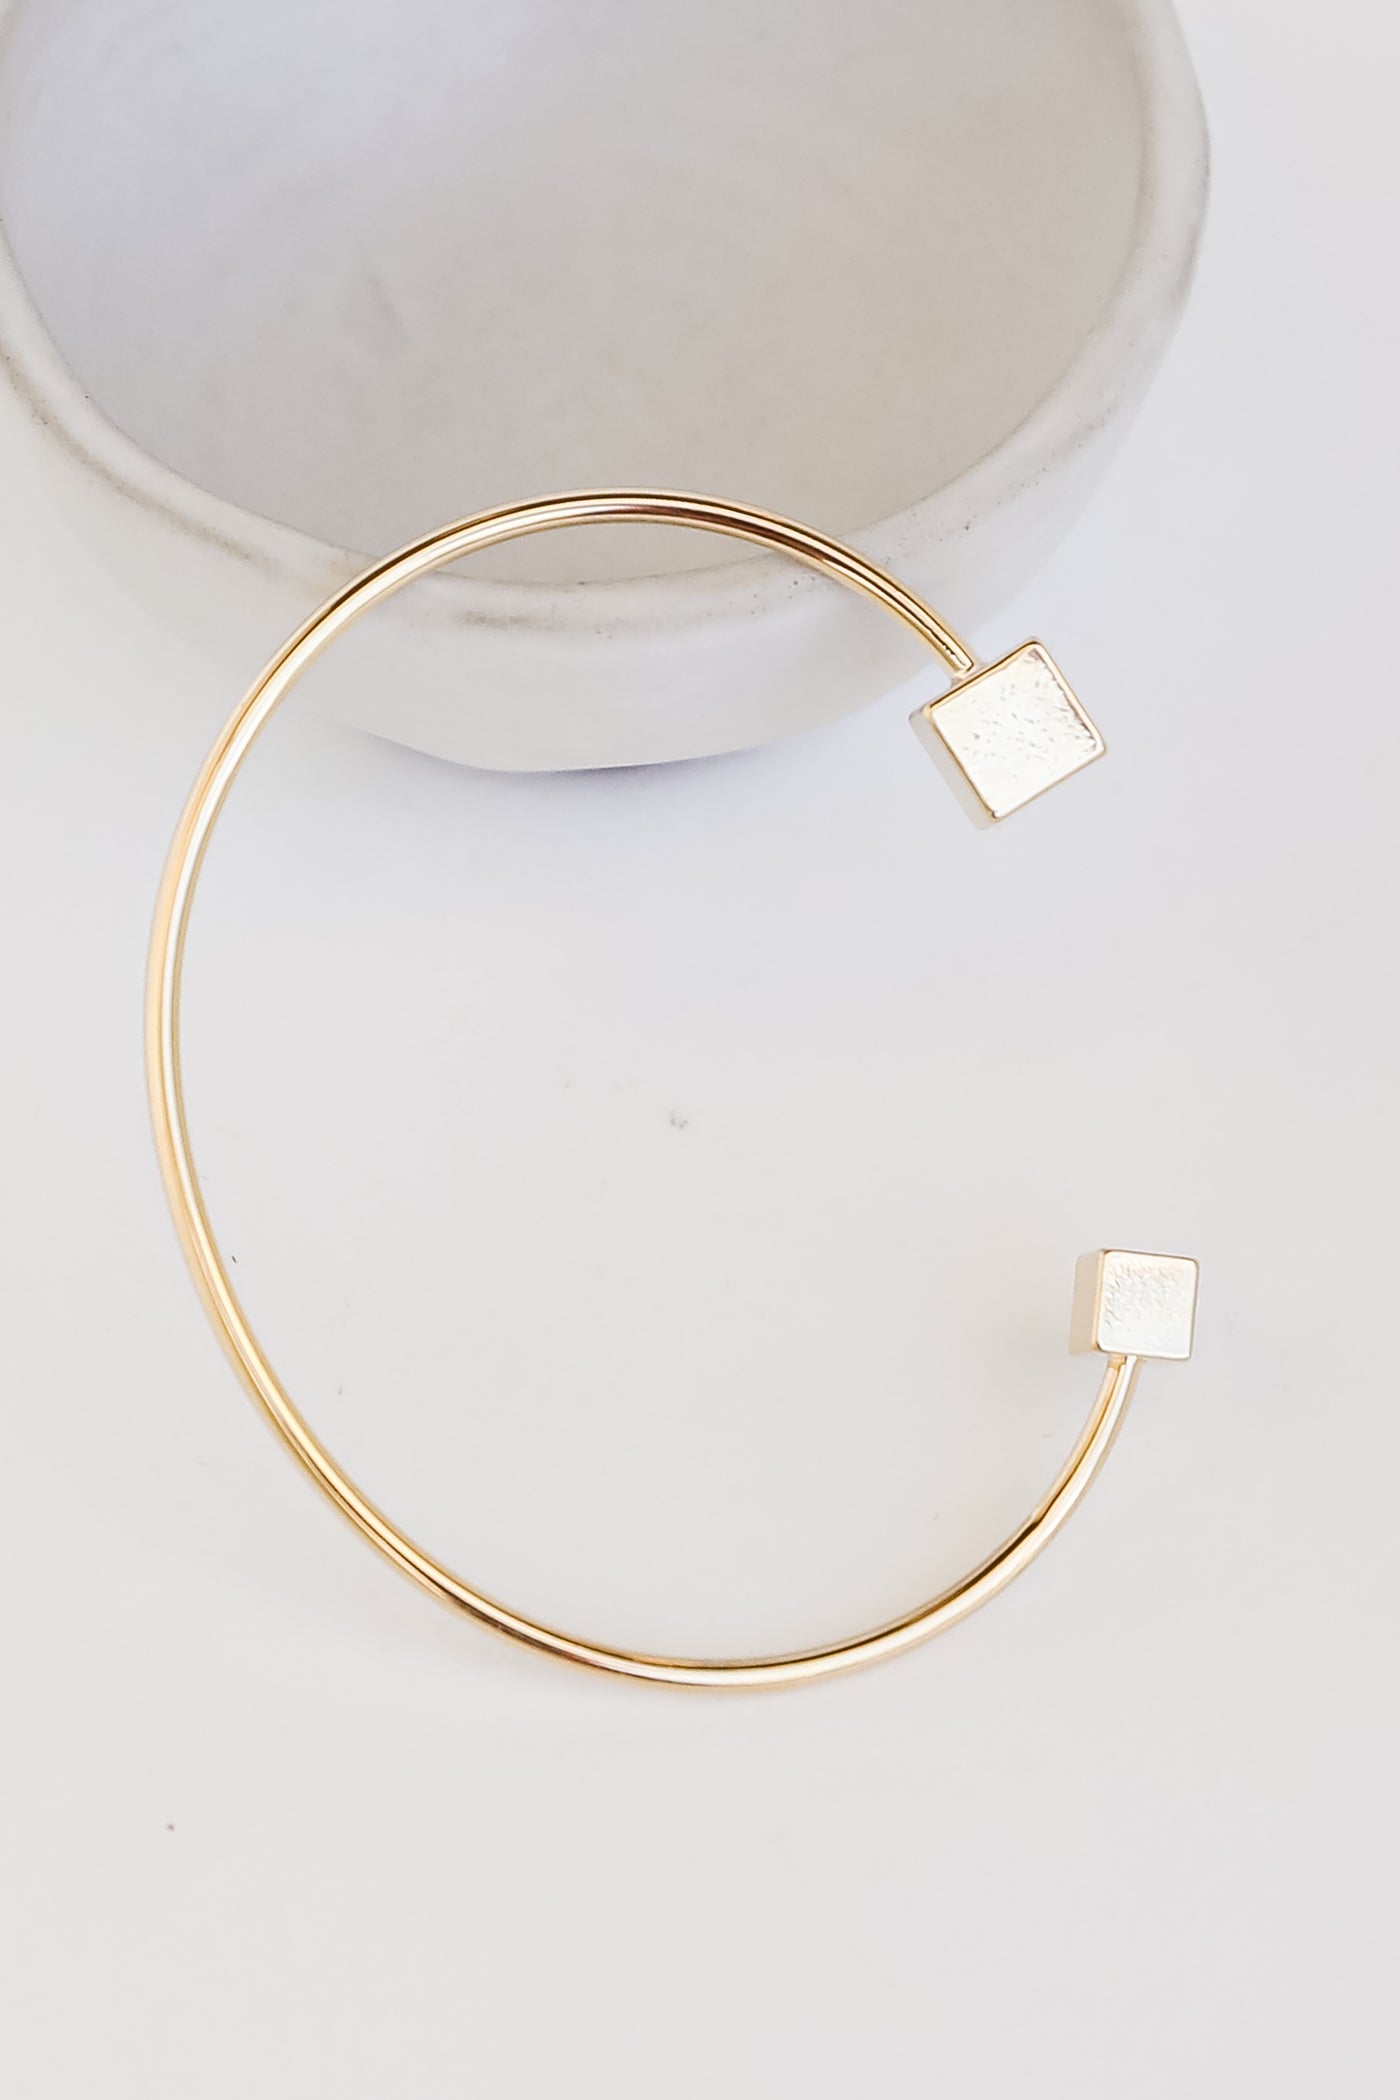 Gold Cuff Bracelet flat lay